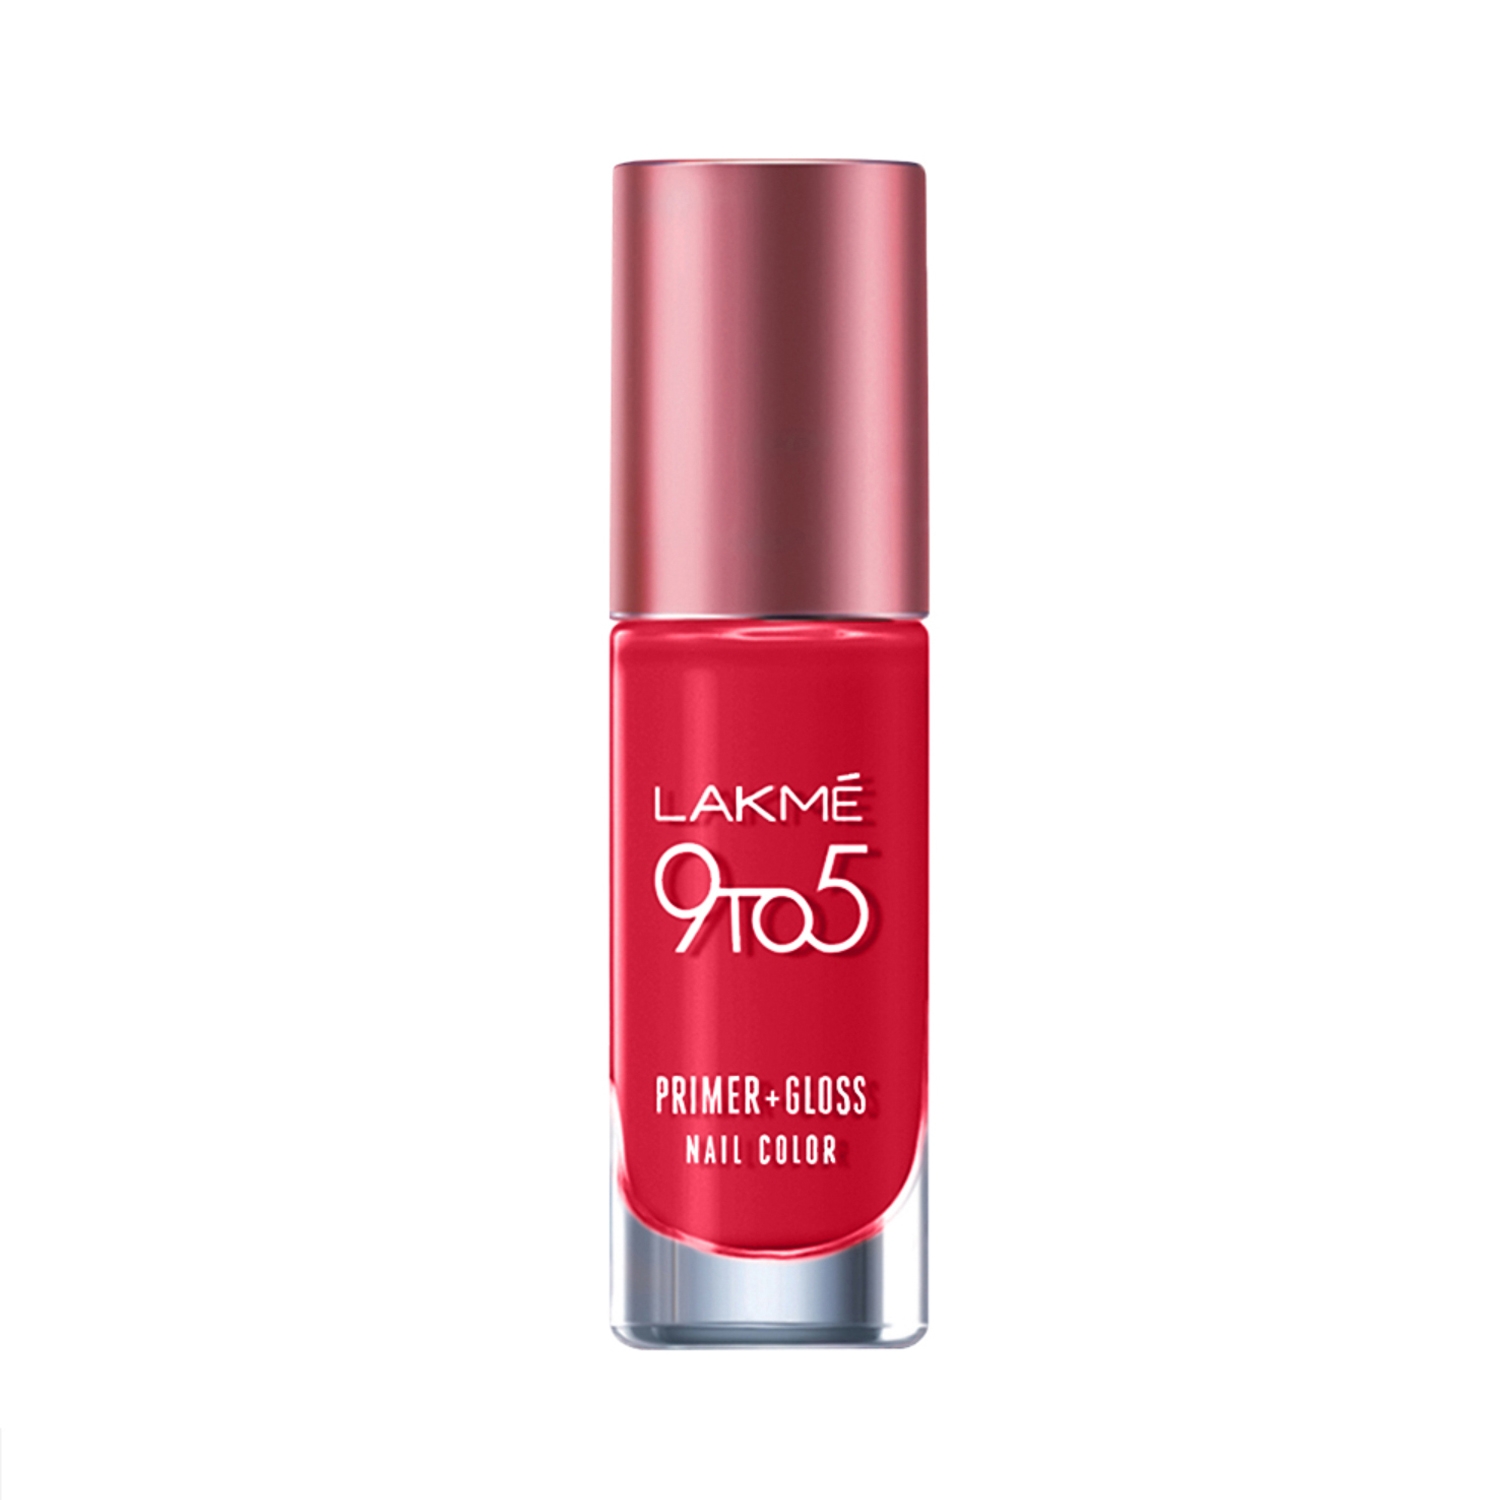 Lakme | Lakme 9 To 5 Primer + Gloss Nail Color - Perky Pink (6ml)